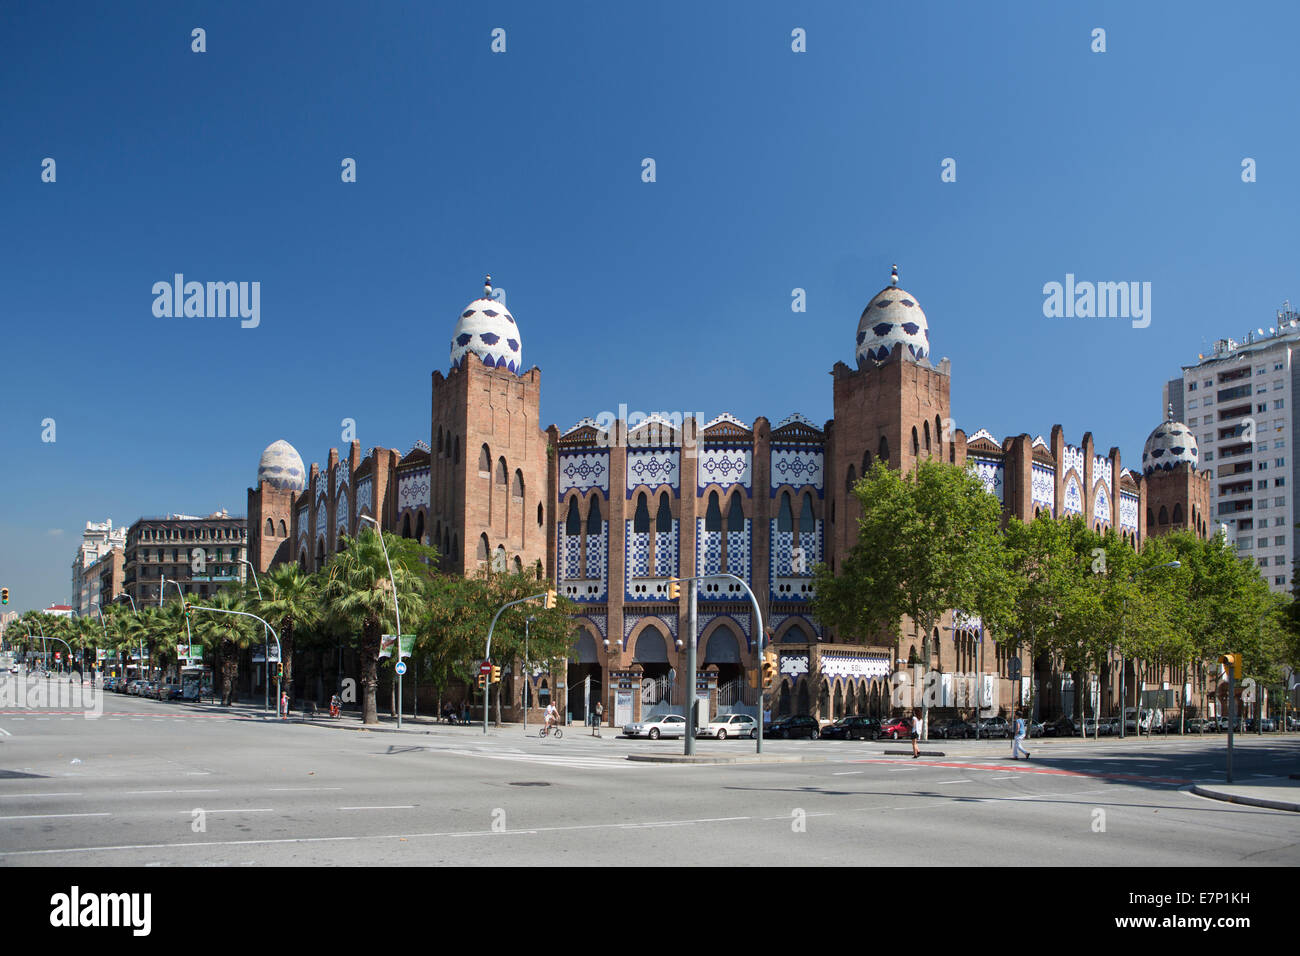 Avenue, Bullfighting, architecture, Barcelona, Catalonia, gran via, monumental, Moorish, skyline, Spain, Europe, touristic, trav Stock Photo